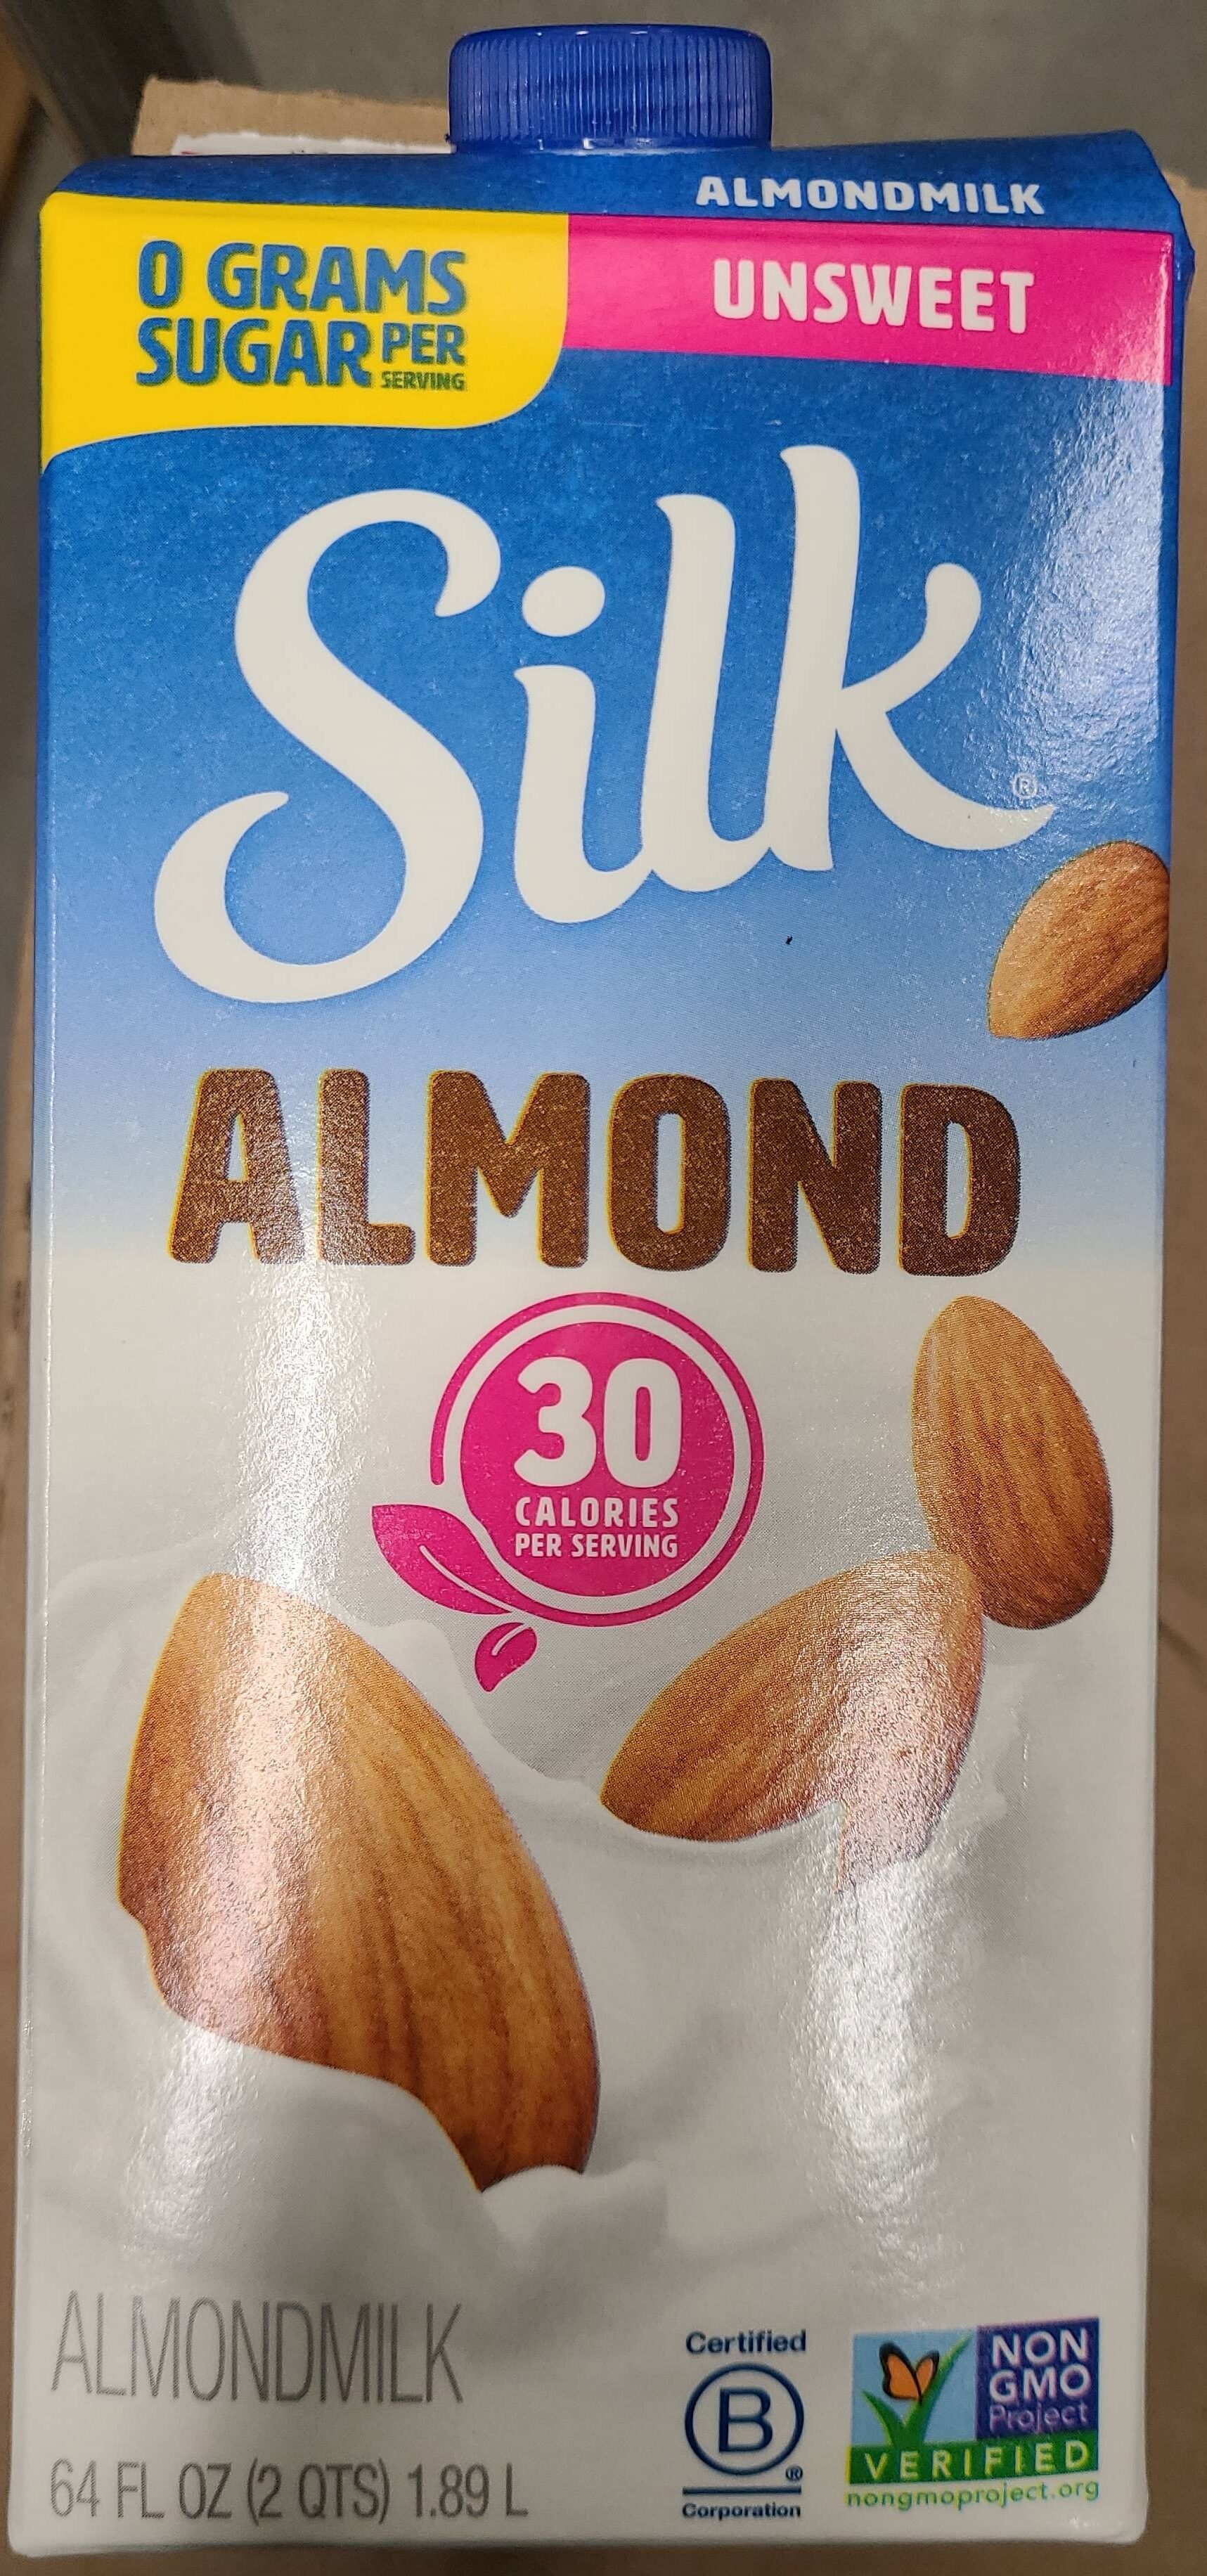 Unsweet Almondmilk - Product